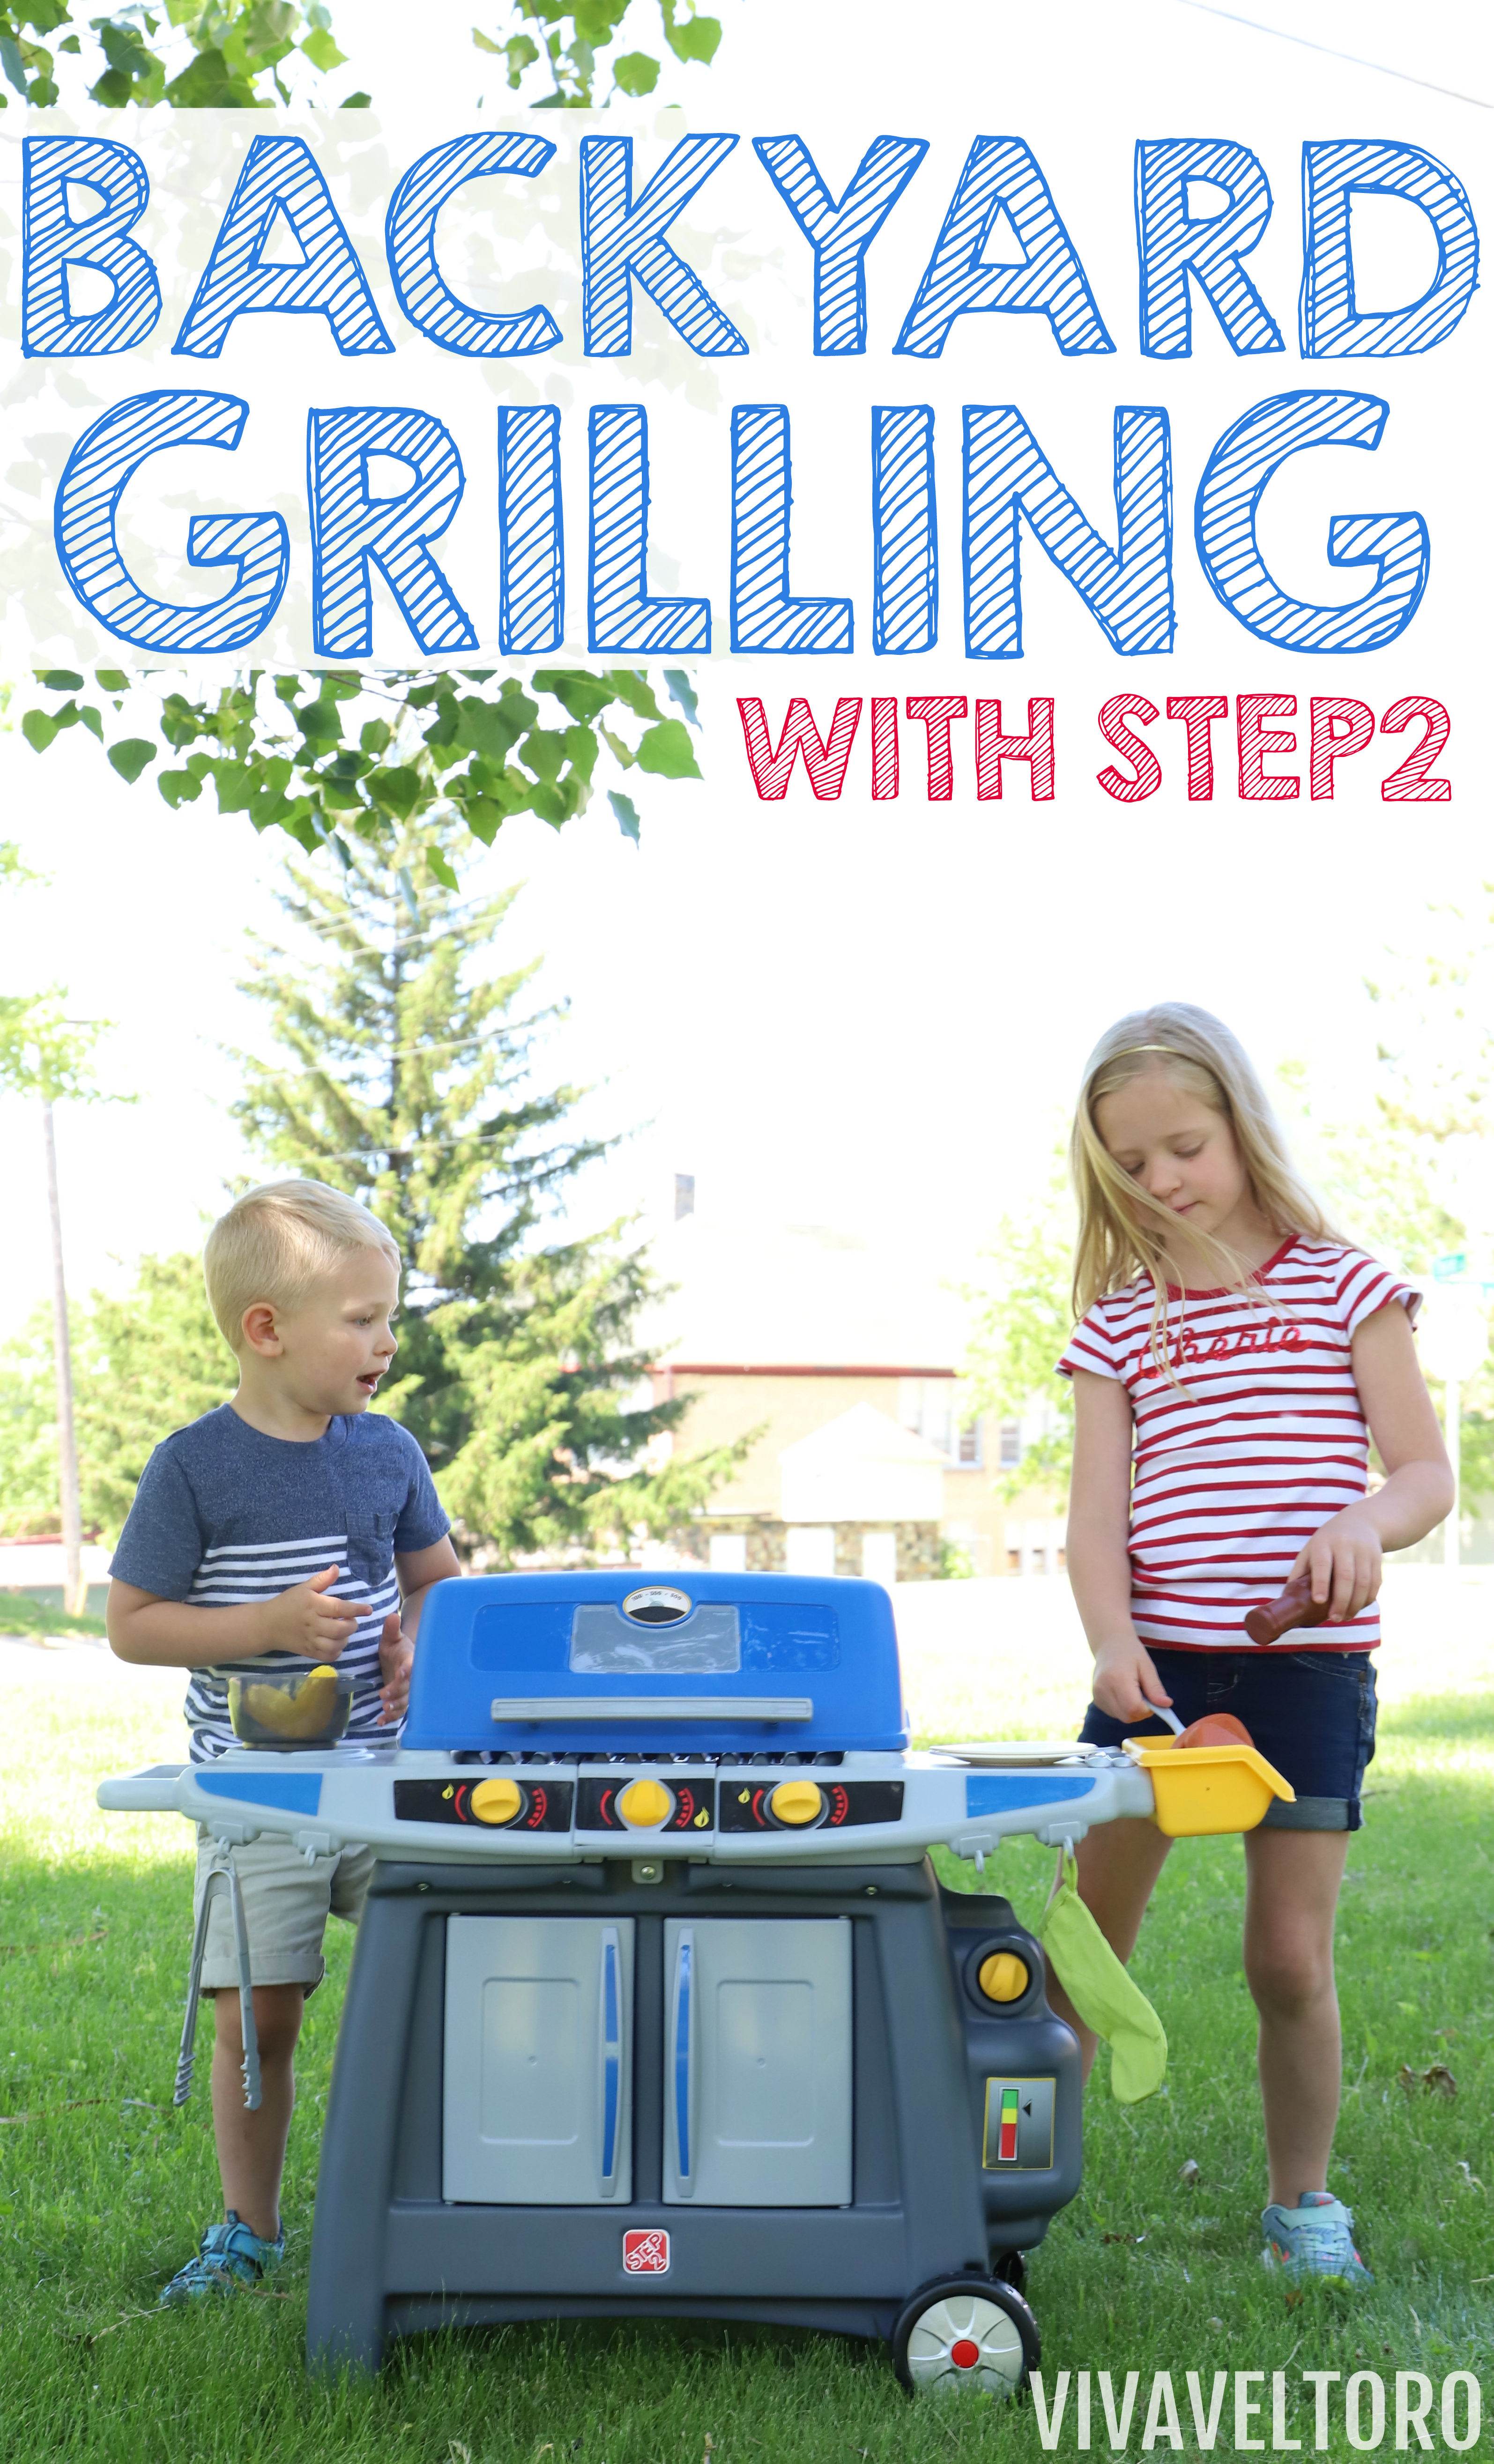 step2 sizzle & smoke toy bbq grill